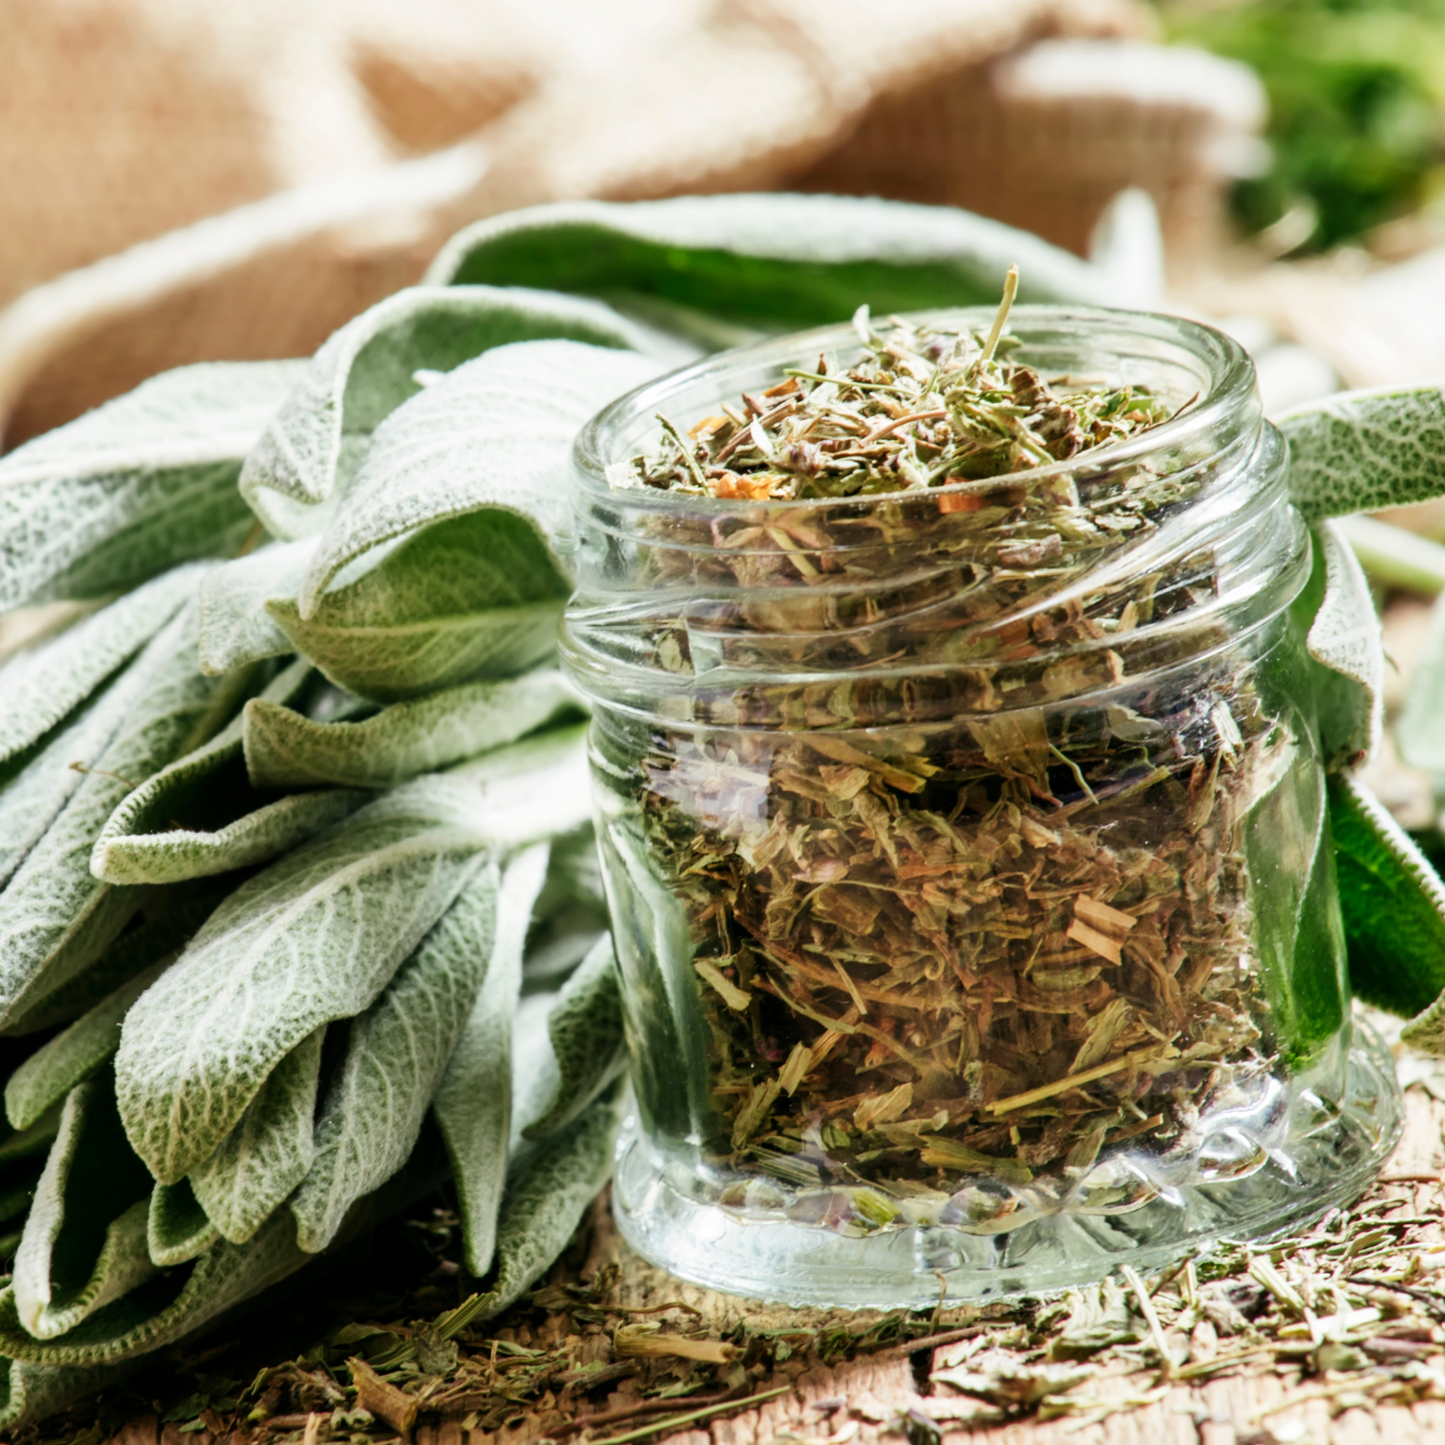 Sage Herb, Dried Herbs, Food Grade Herbs, Herbs and Spices, Loose Leaf Herbs